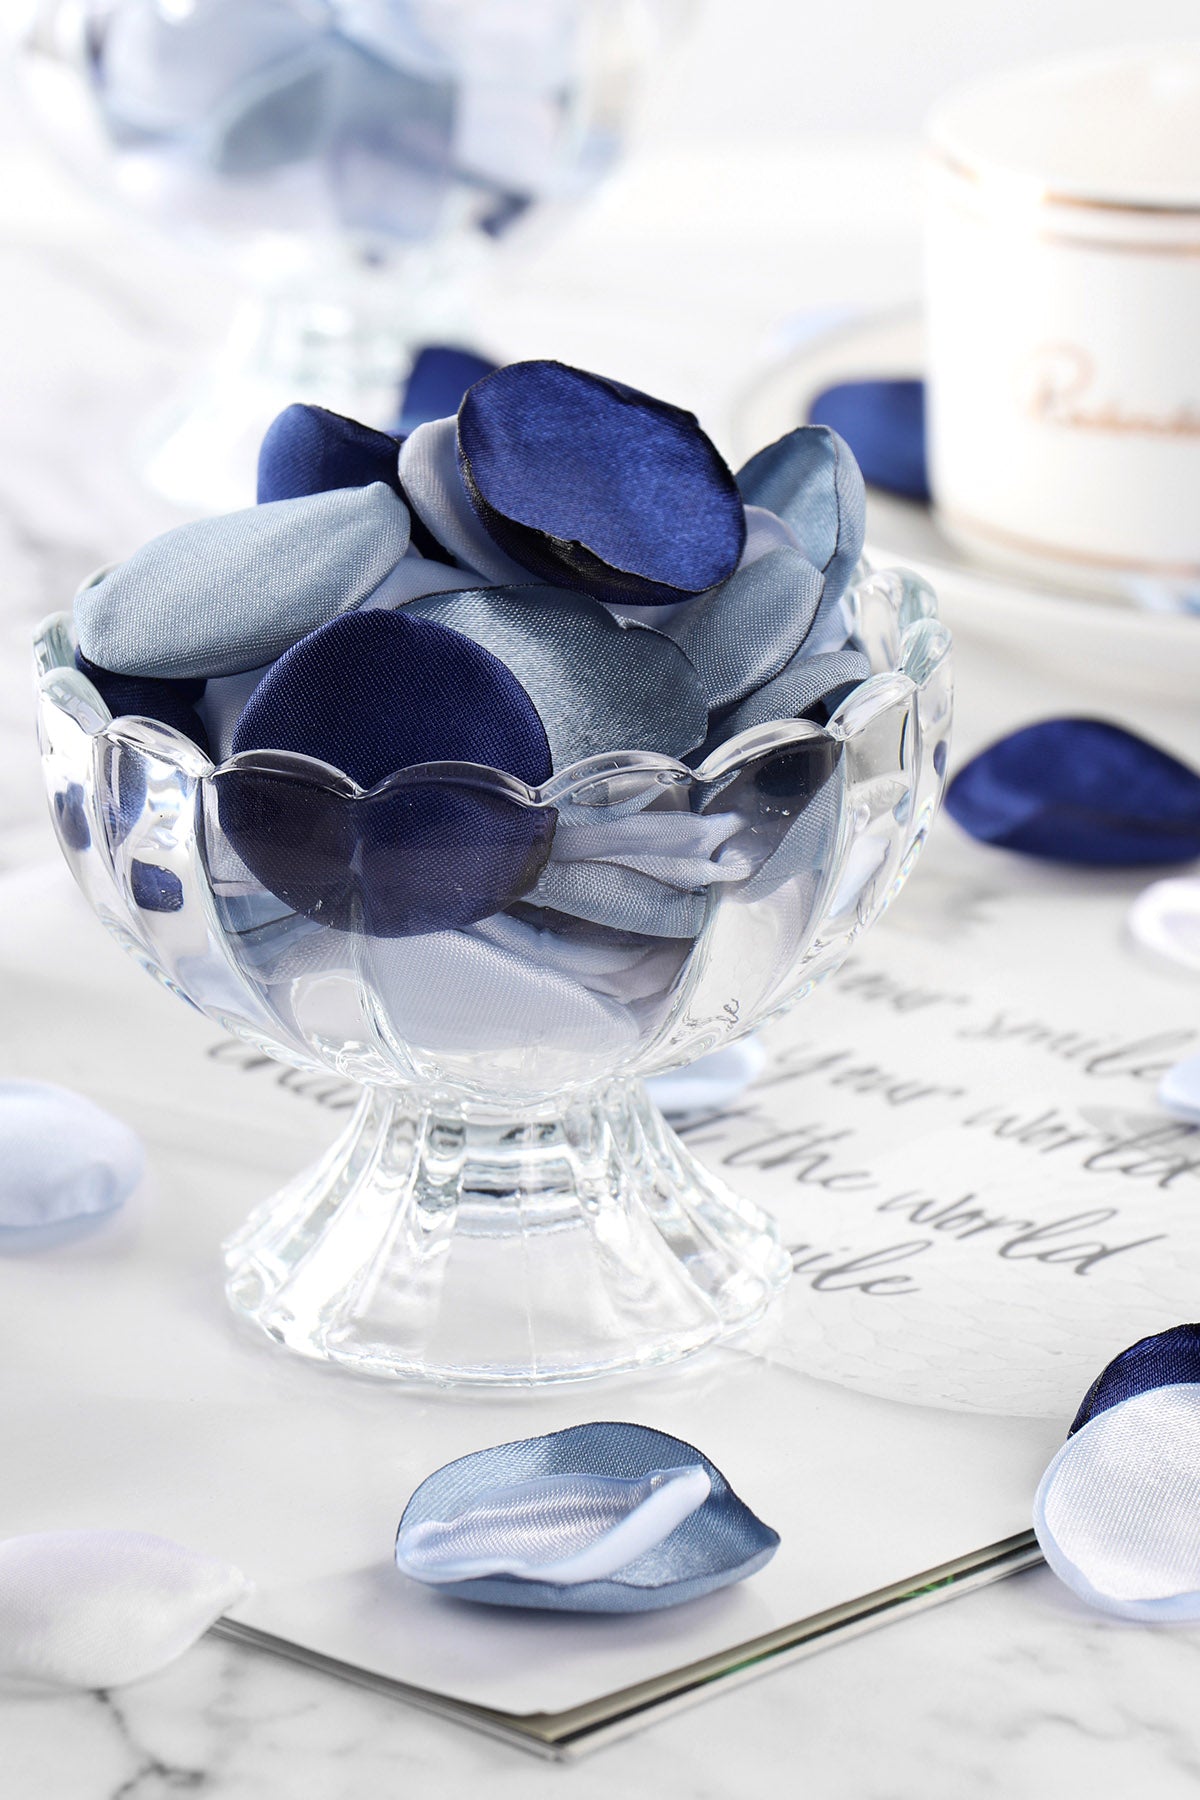 Silk Rose Petals 400 Pcs - Dusty Blue Navy